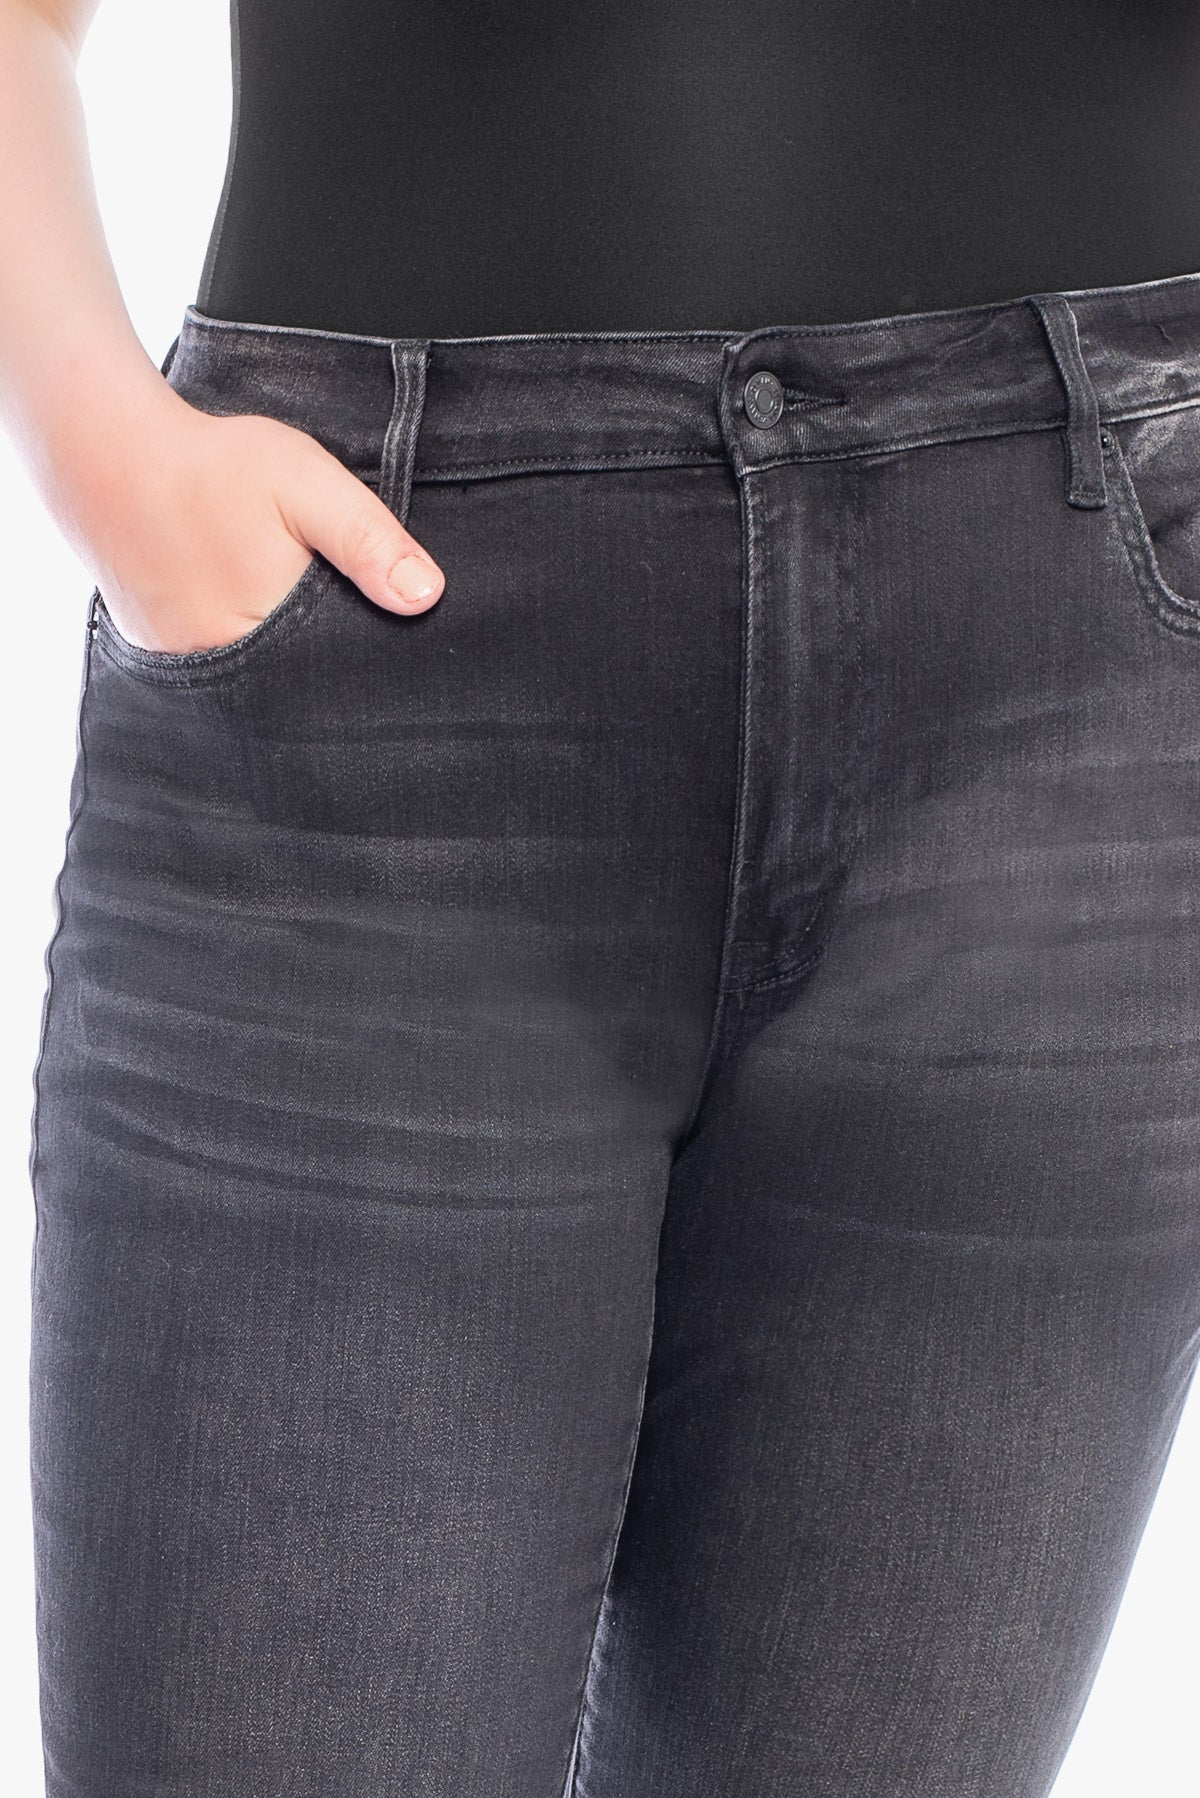 NATALIE black straight jeans